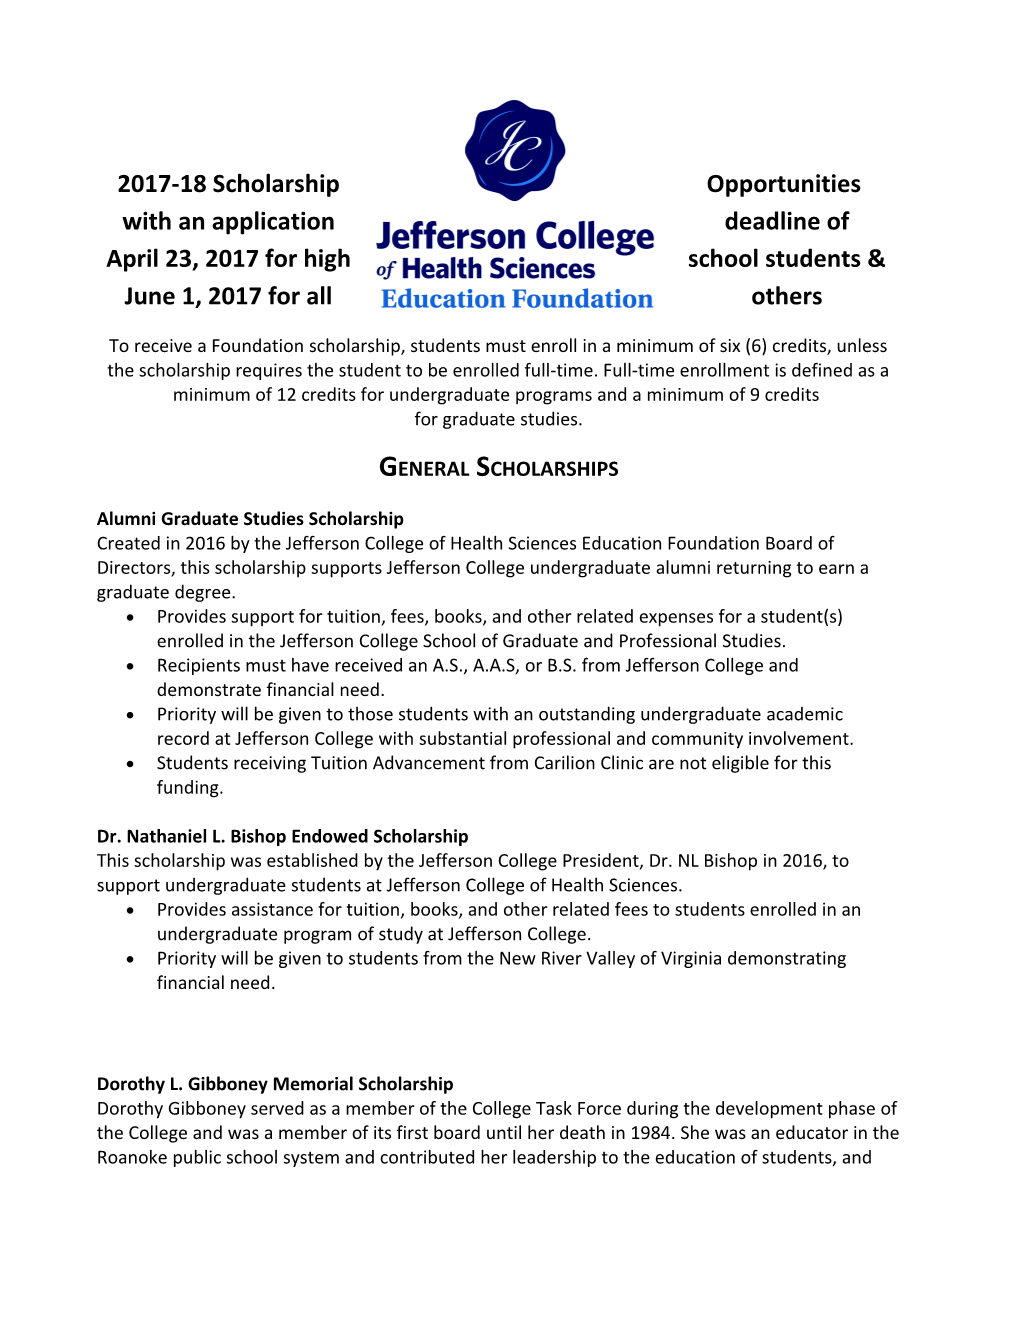 Alumni Graduate Studies Scholarship